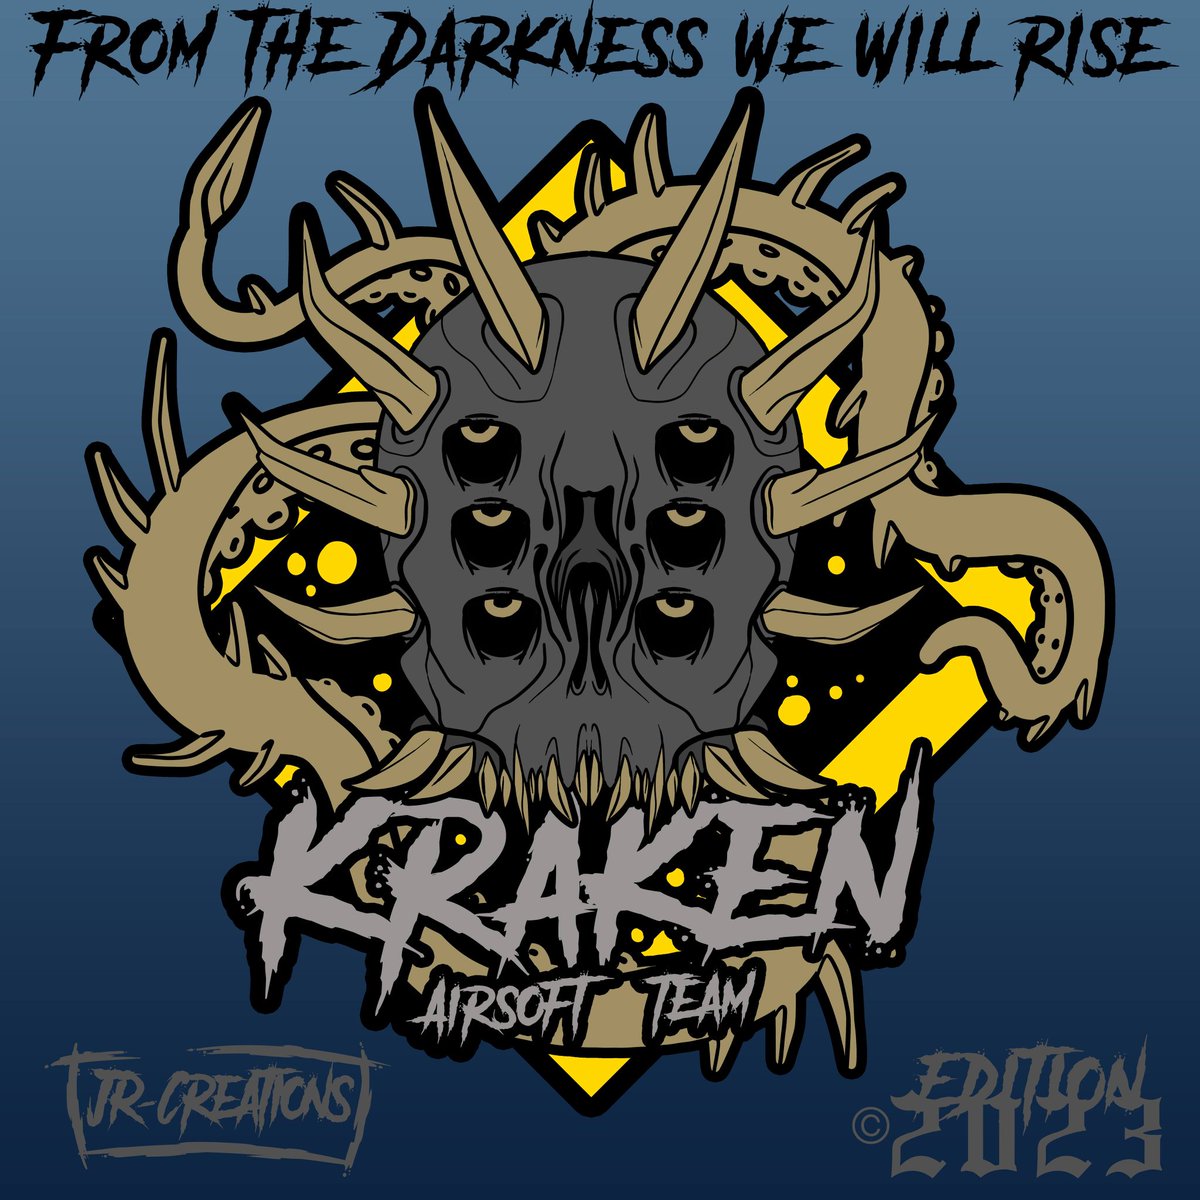 Petite refonte du logo de la Kraken Airsoft Team 

#dark #team #airsoft #refonte #logo #design #dessin #darkness #association #softair #drawing